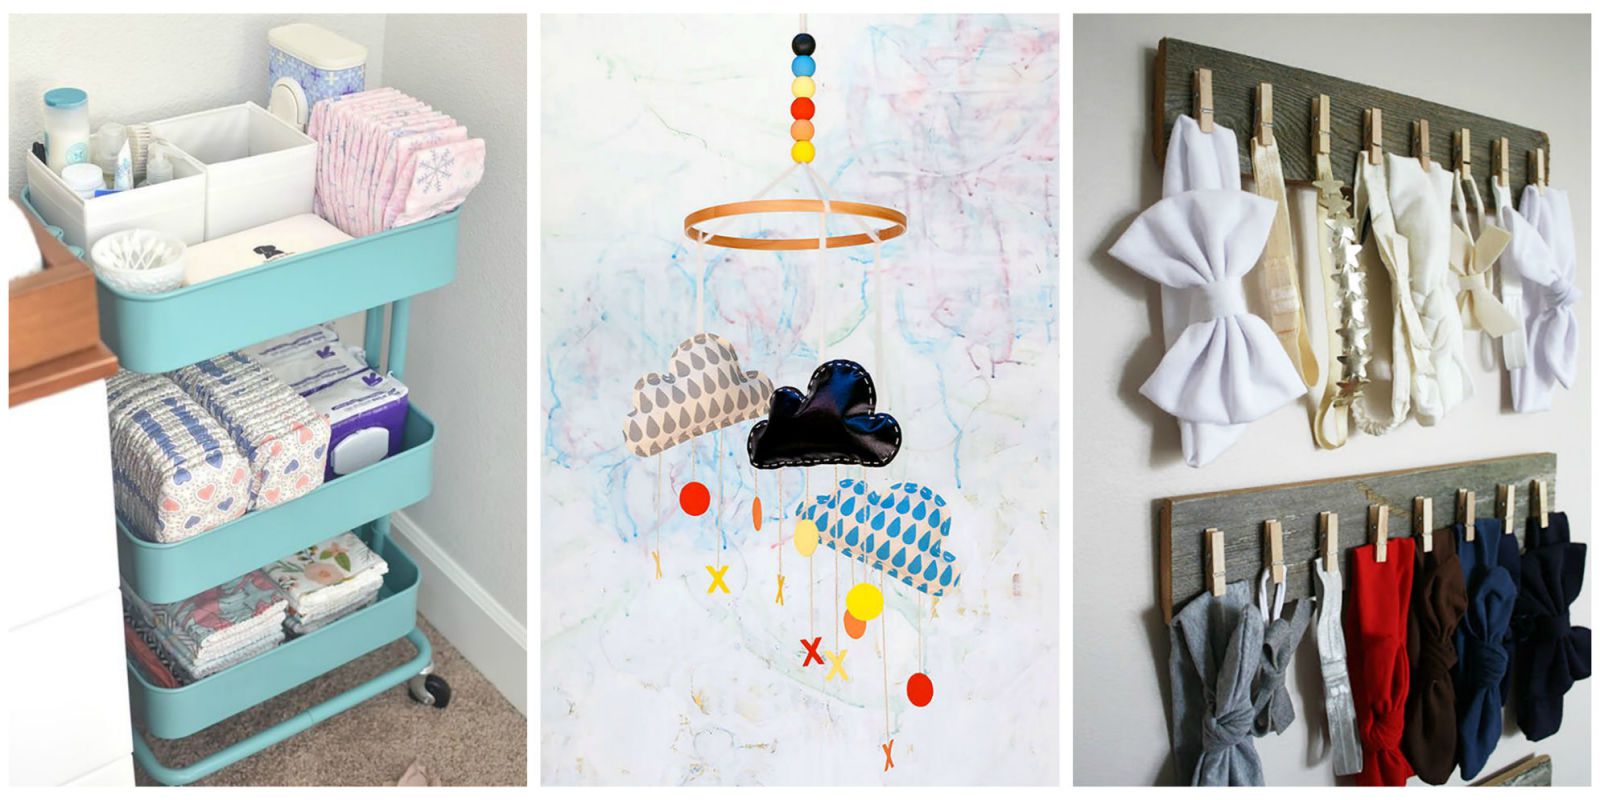 20 Best Baby Room Decor Ideas - Nursery Design, Organization, and